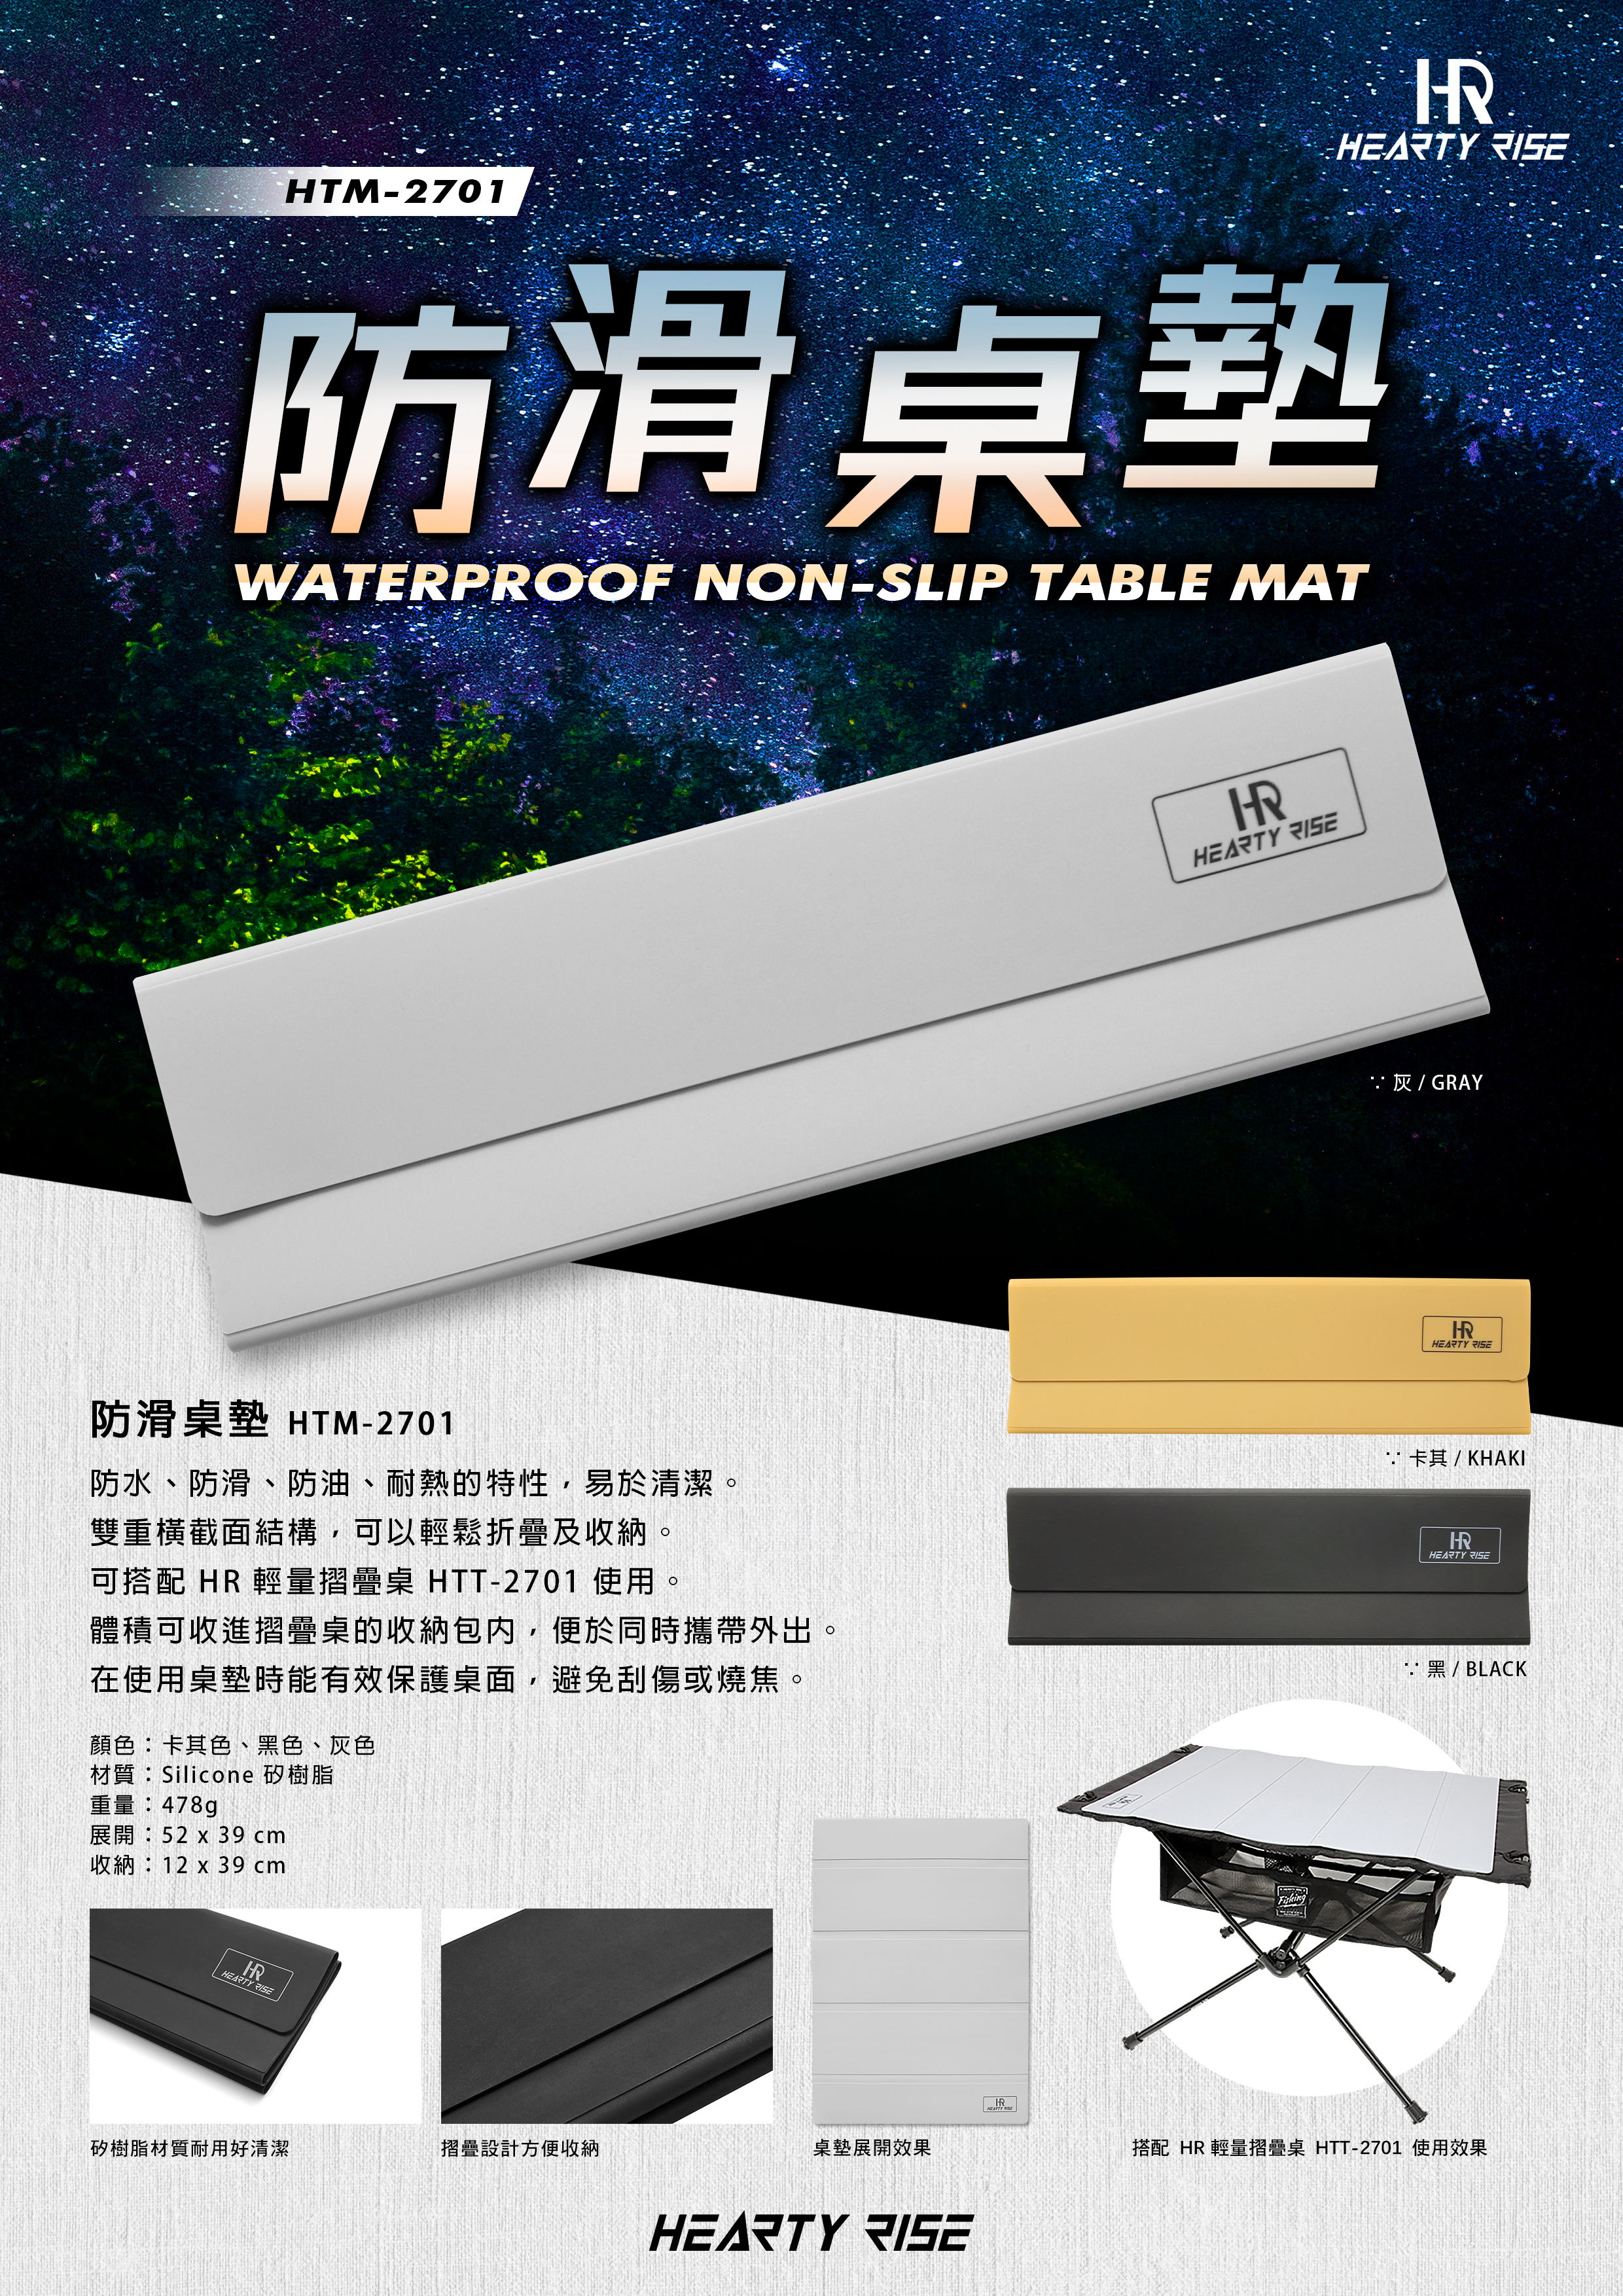 HR WATERPROOF NON-SLIP TABLE MAT 防滑桌墊 HTM-2701 A4 POP